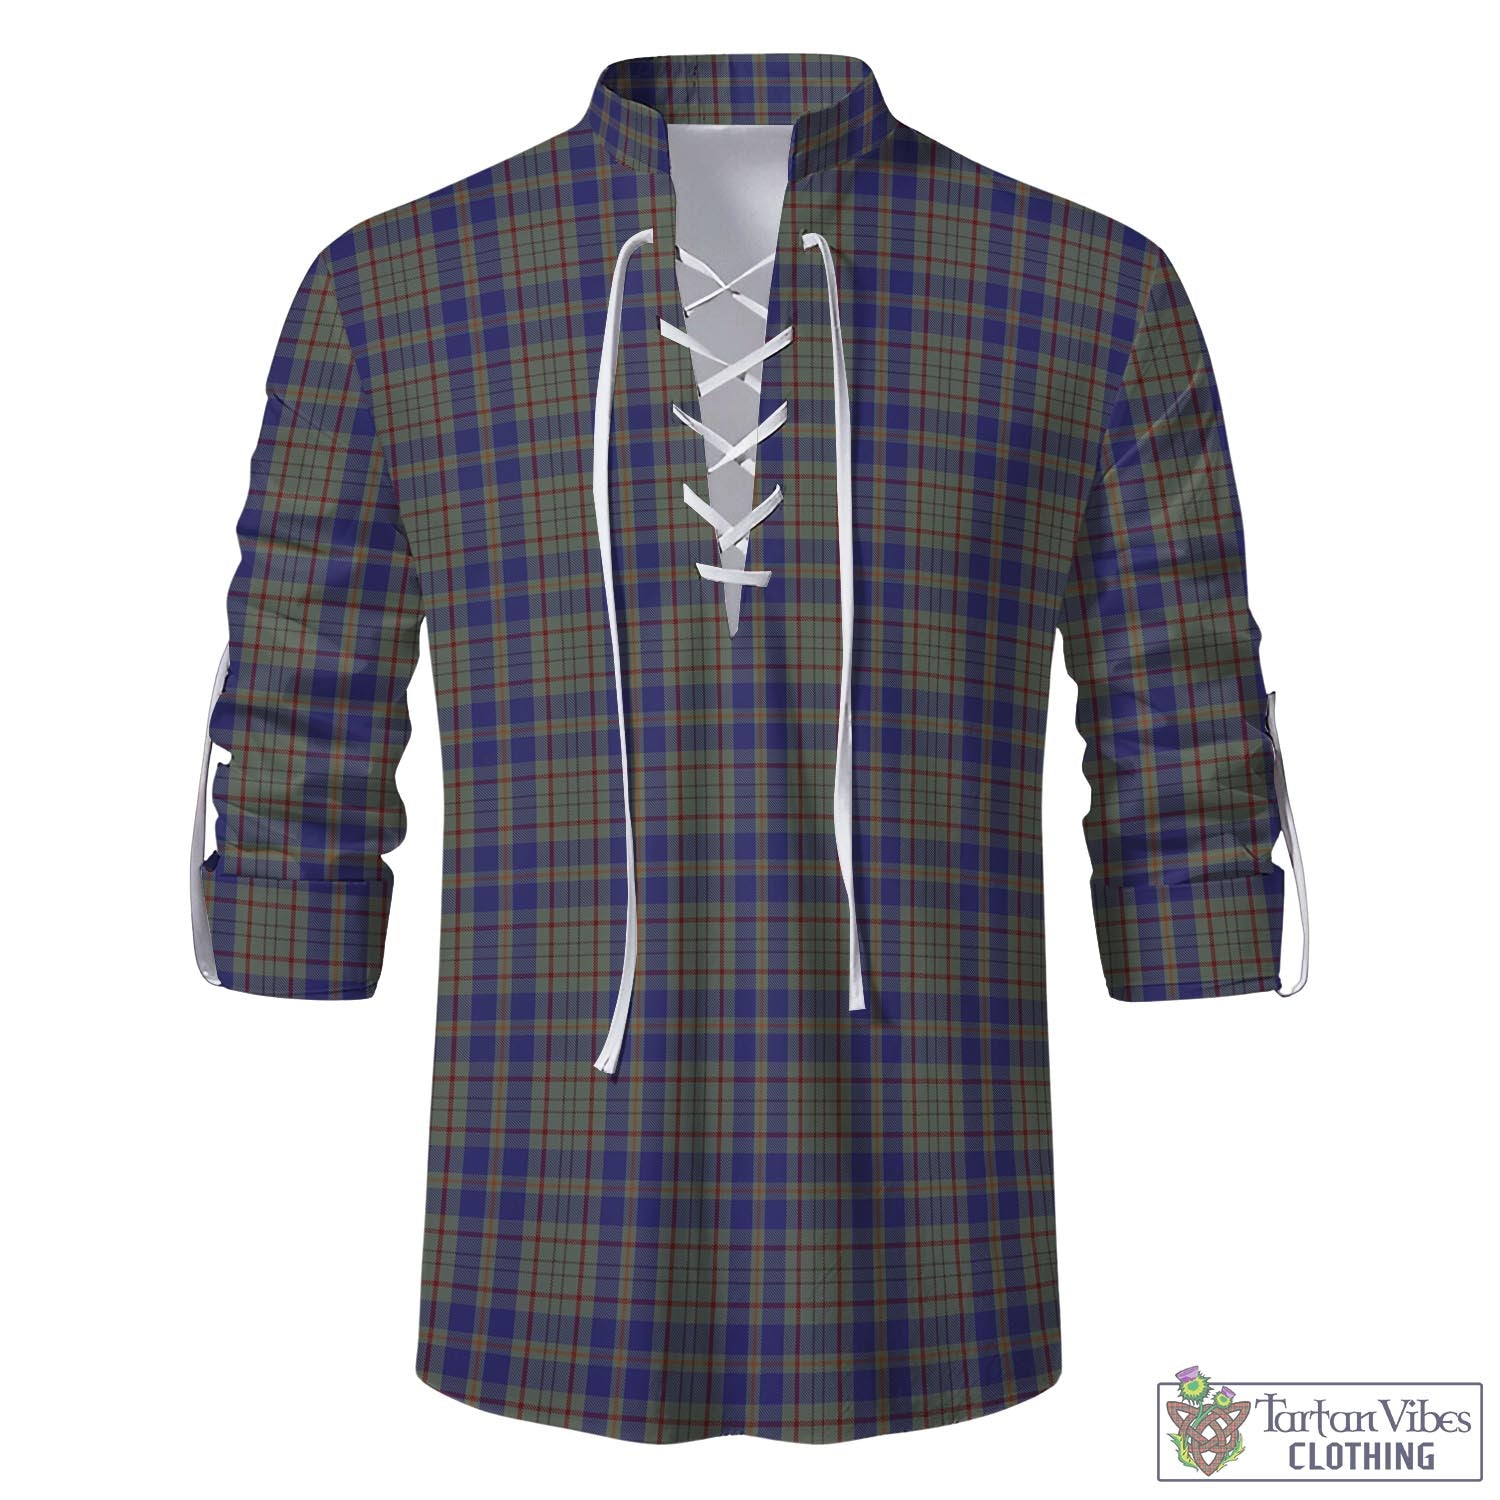 Tartan Vibes Clothing Kildare County Ireland Tartan Men's Scottish Traditional Jacobite Ghillie Kilt Shirt